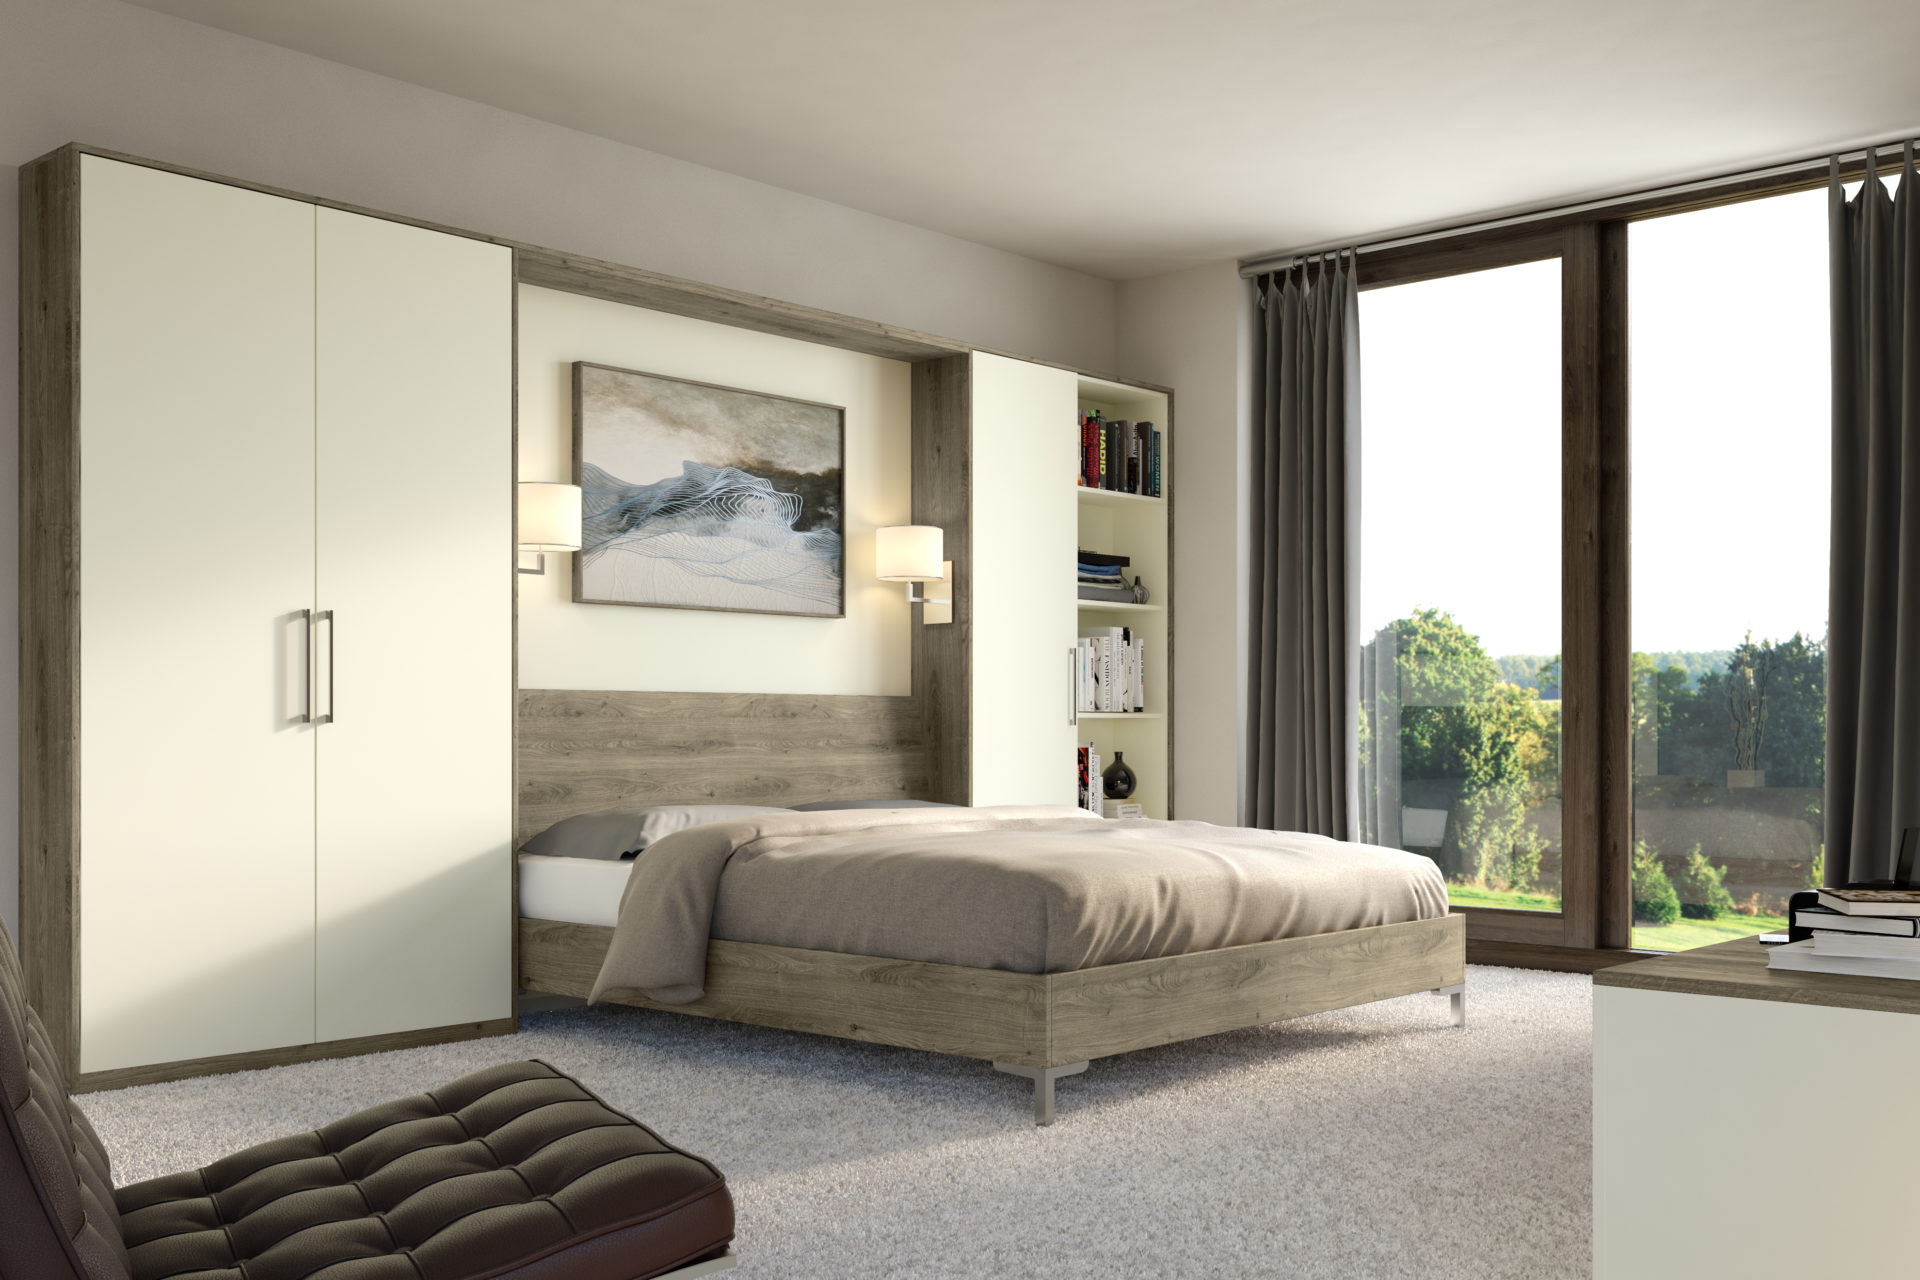 Cream and Denver oak fitted bedroom furniture